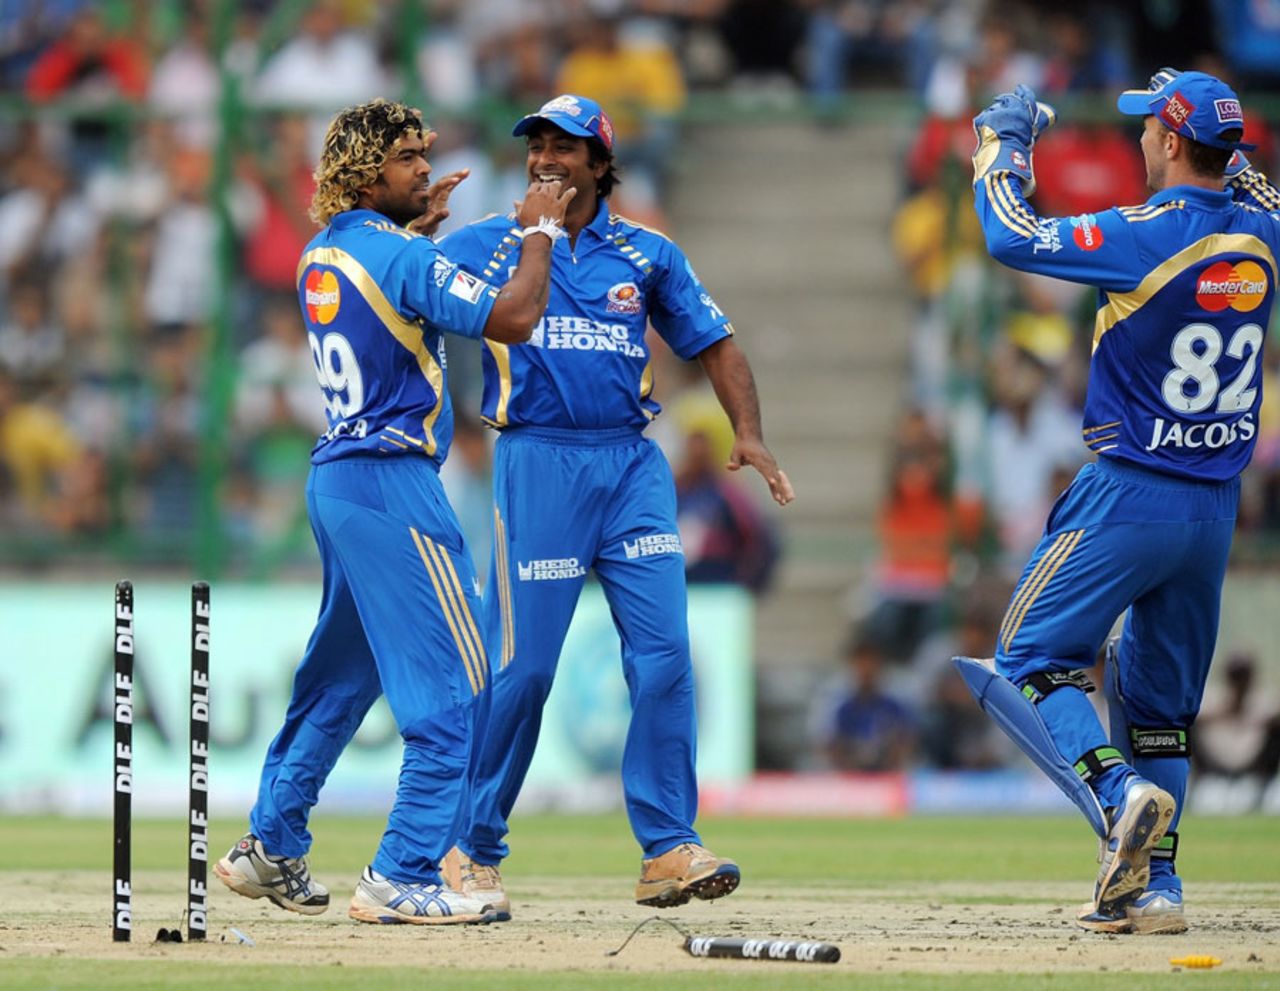 Team-mates congratulate Lasith Malinga after he bowled Unmukt Chand for a duck, Delhi Daredevils v Mumbai Indians, IPL 2011, Kochi, April 10, 2011